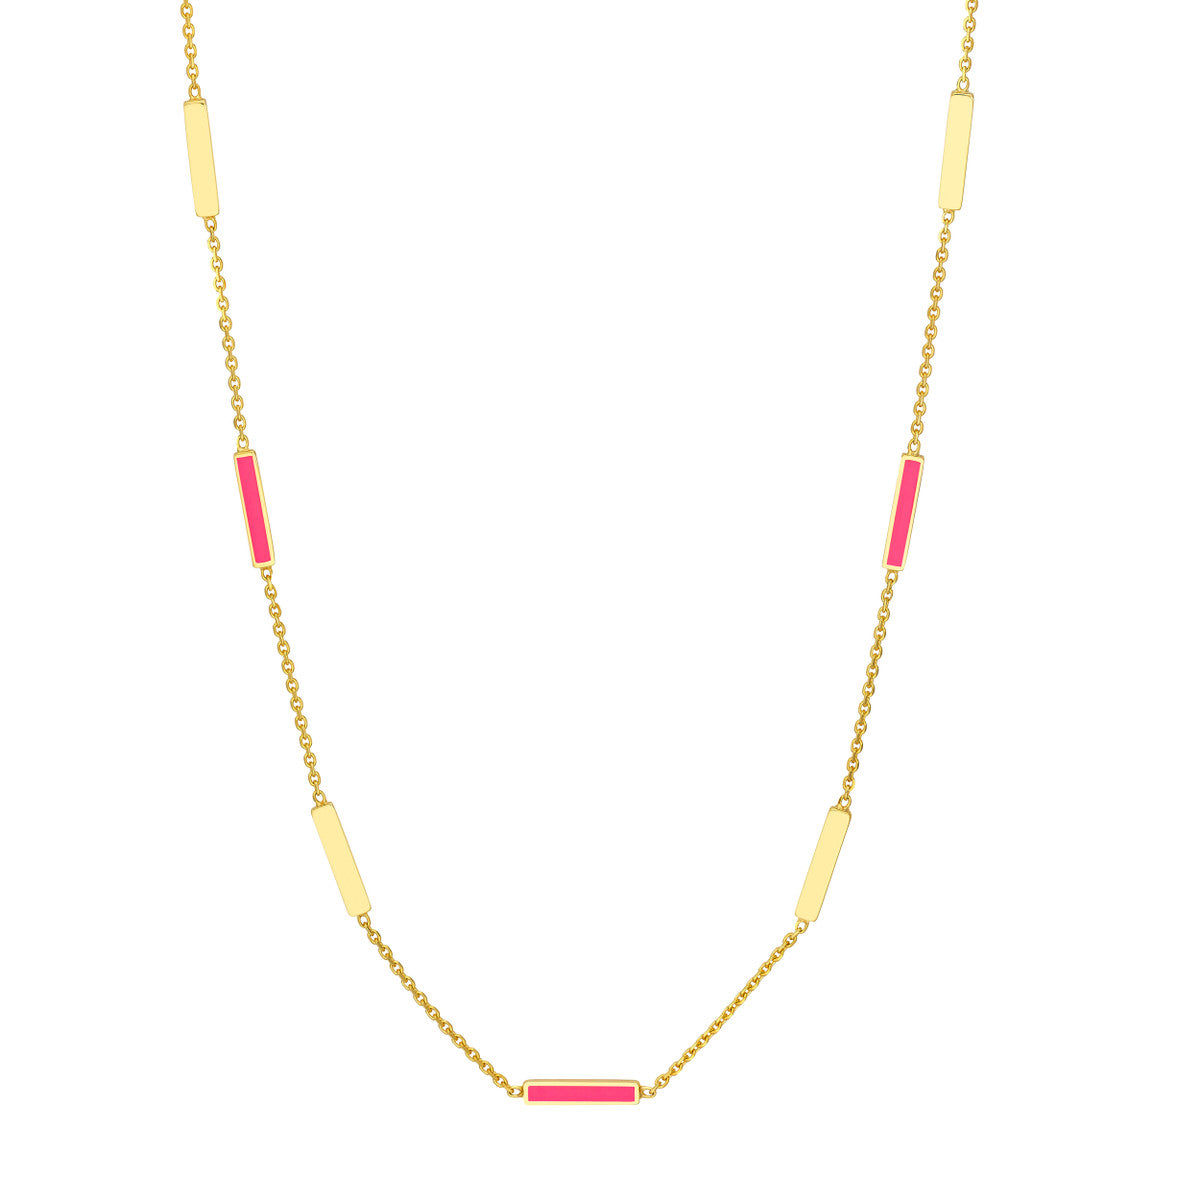 Neon Pink Enamel Alternating Bar Necklace